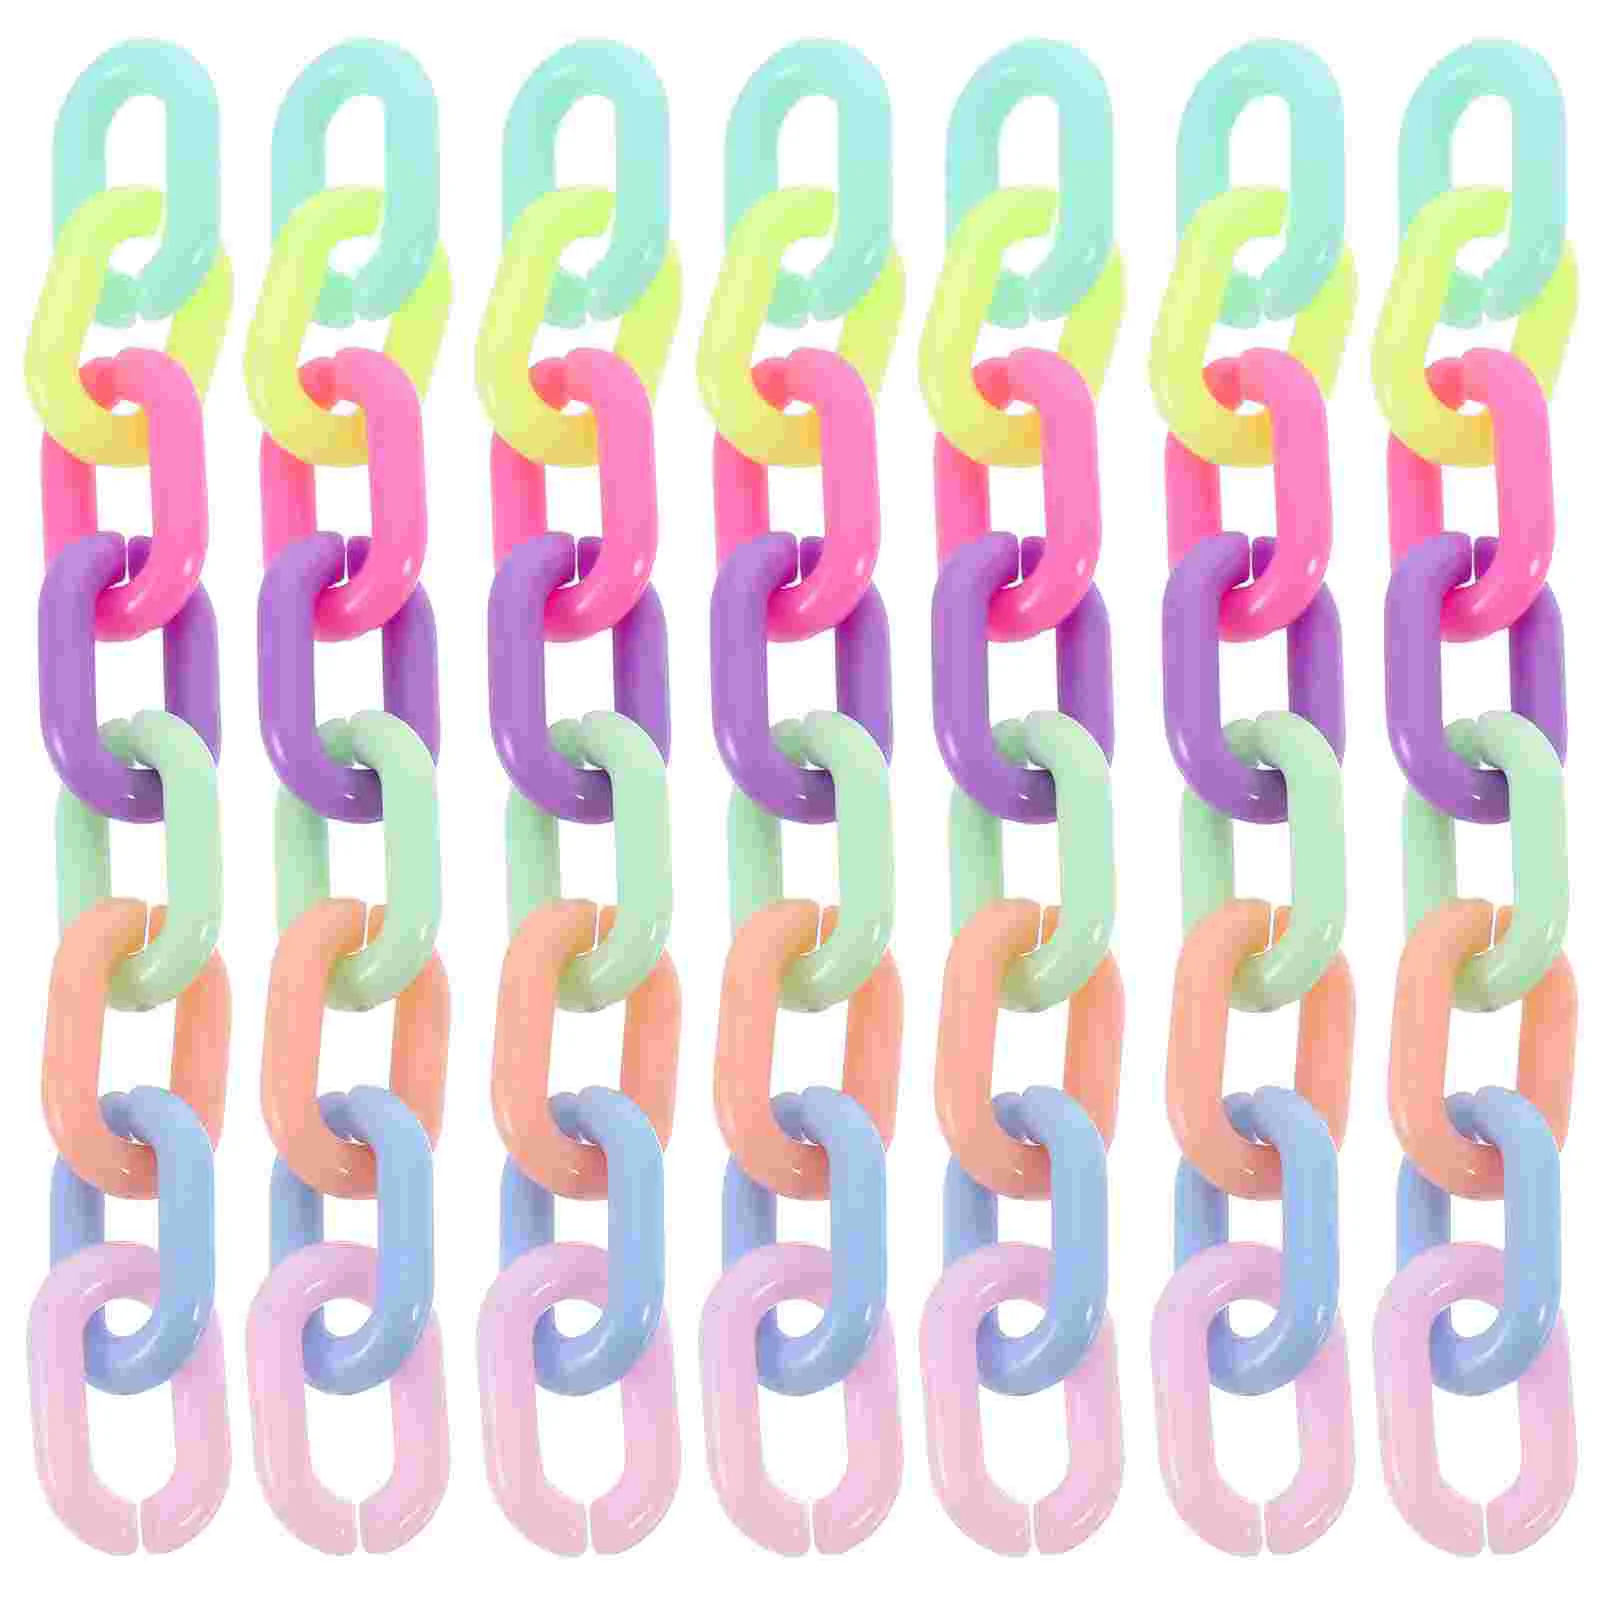 

800Pcs Acrylic Linking Ring Detachable Acrylic Chain Link Rings Bag Strap Chain Making Rings